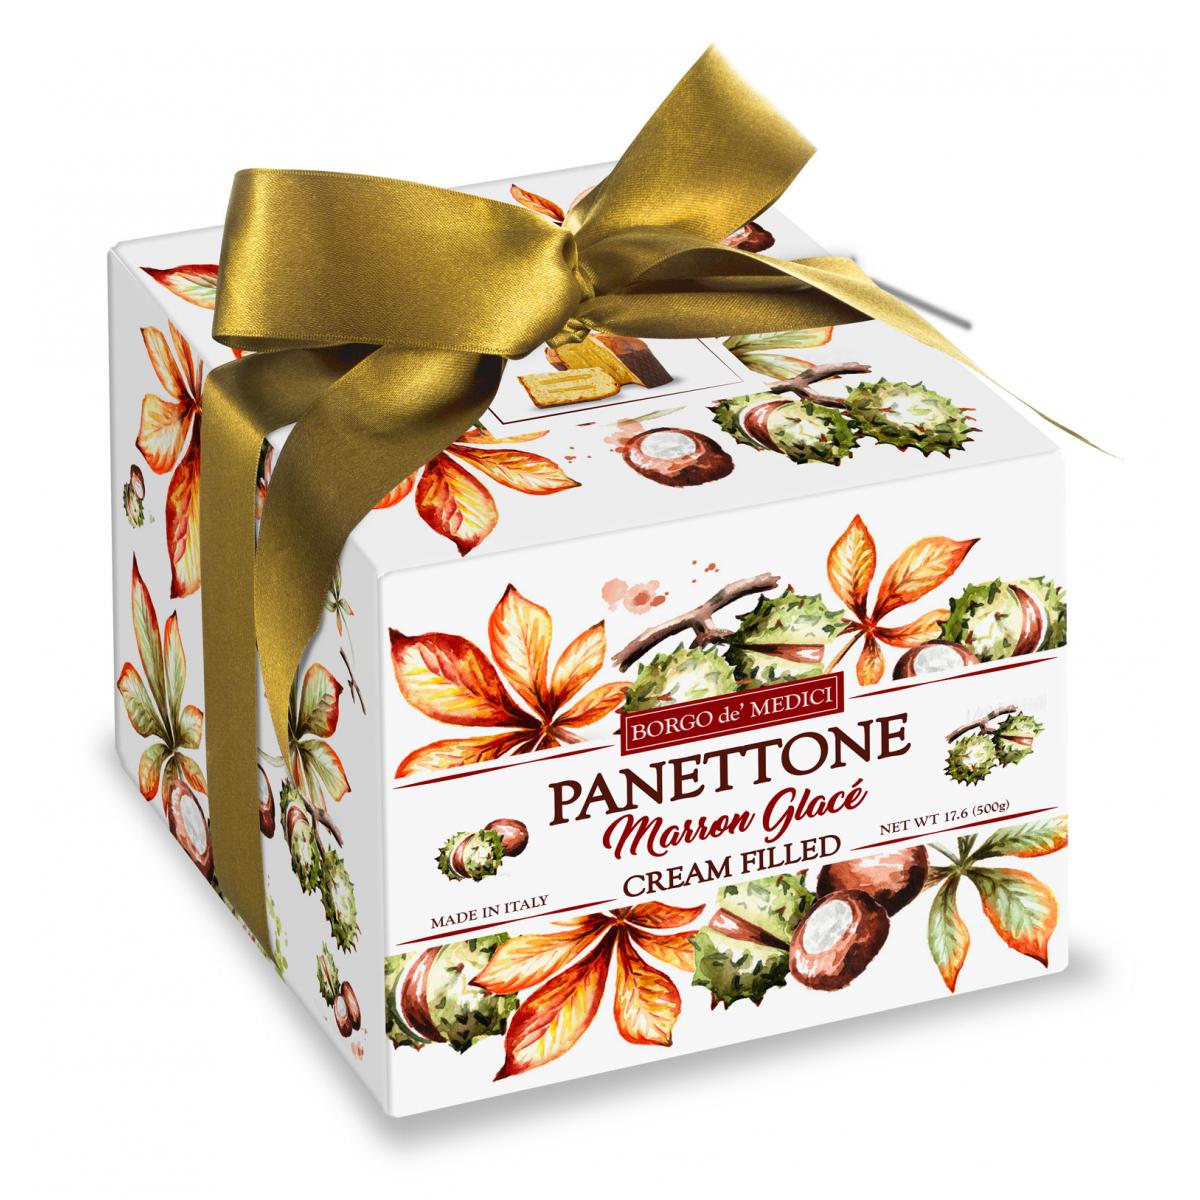 Marron Glace Cream Filled Panettone